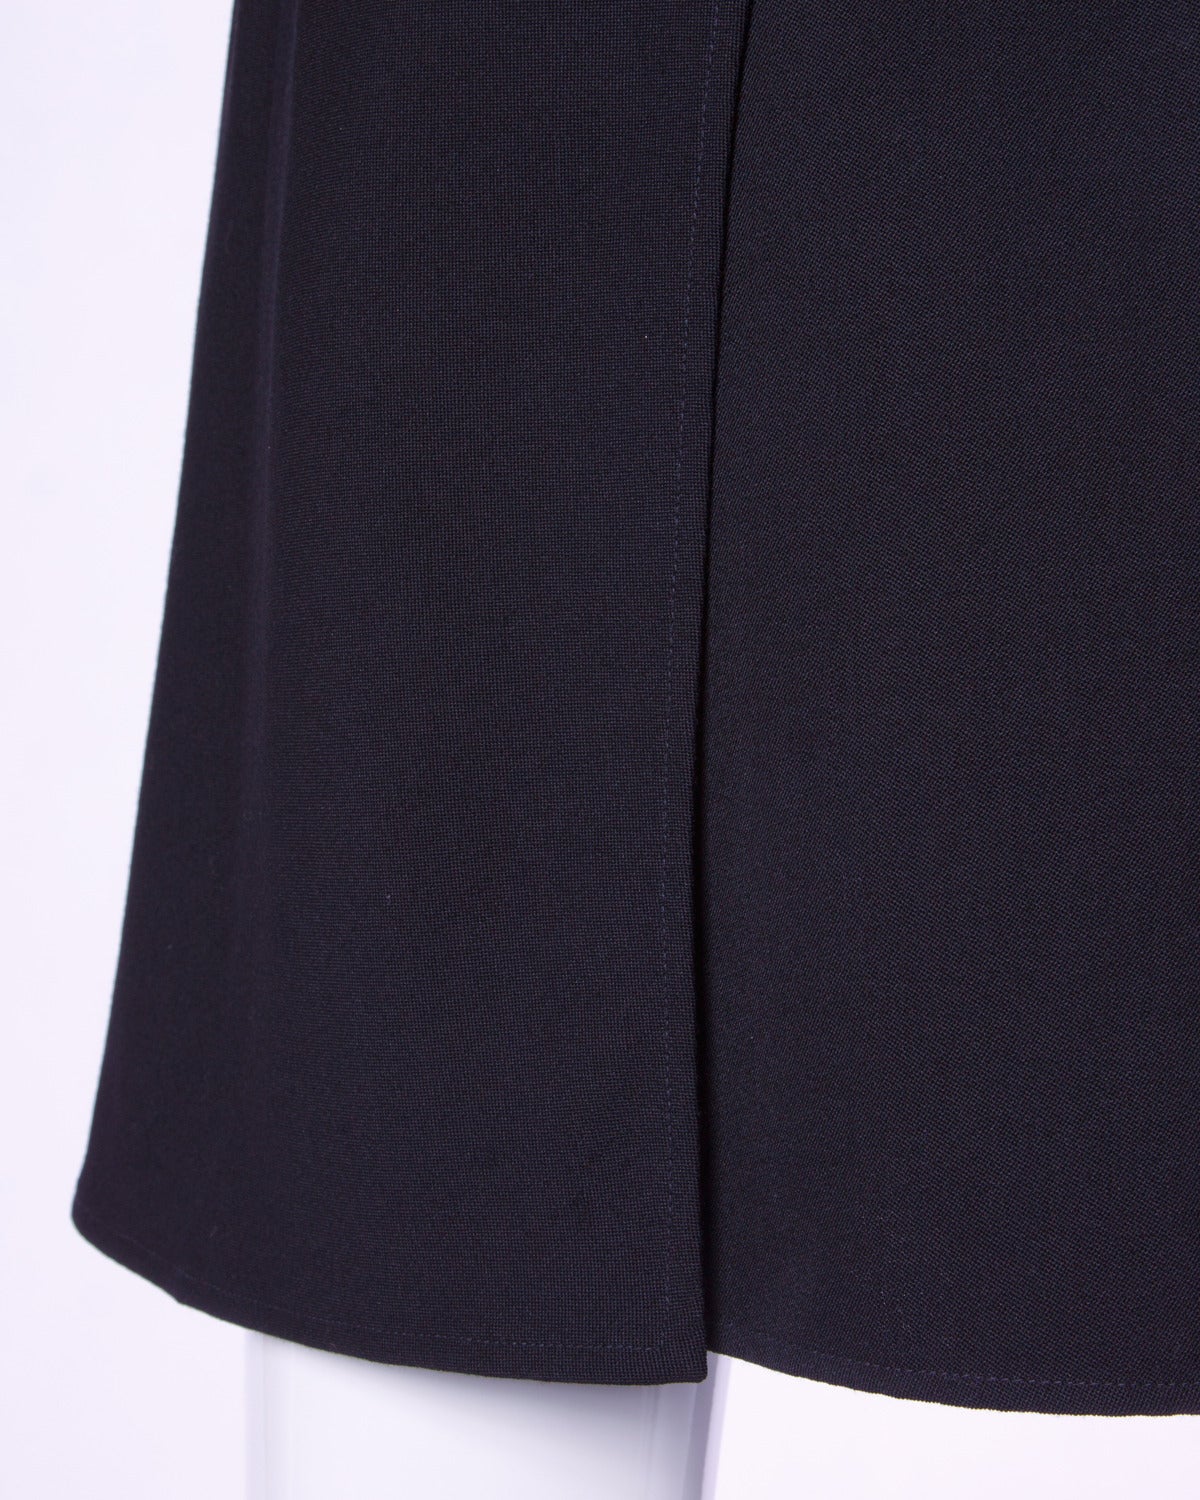 Karl Lagerfeld Vintage 1990s 90s Black Wool Skirt with Back Detail 2